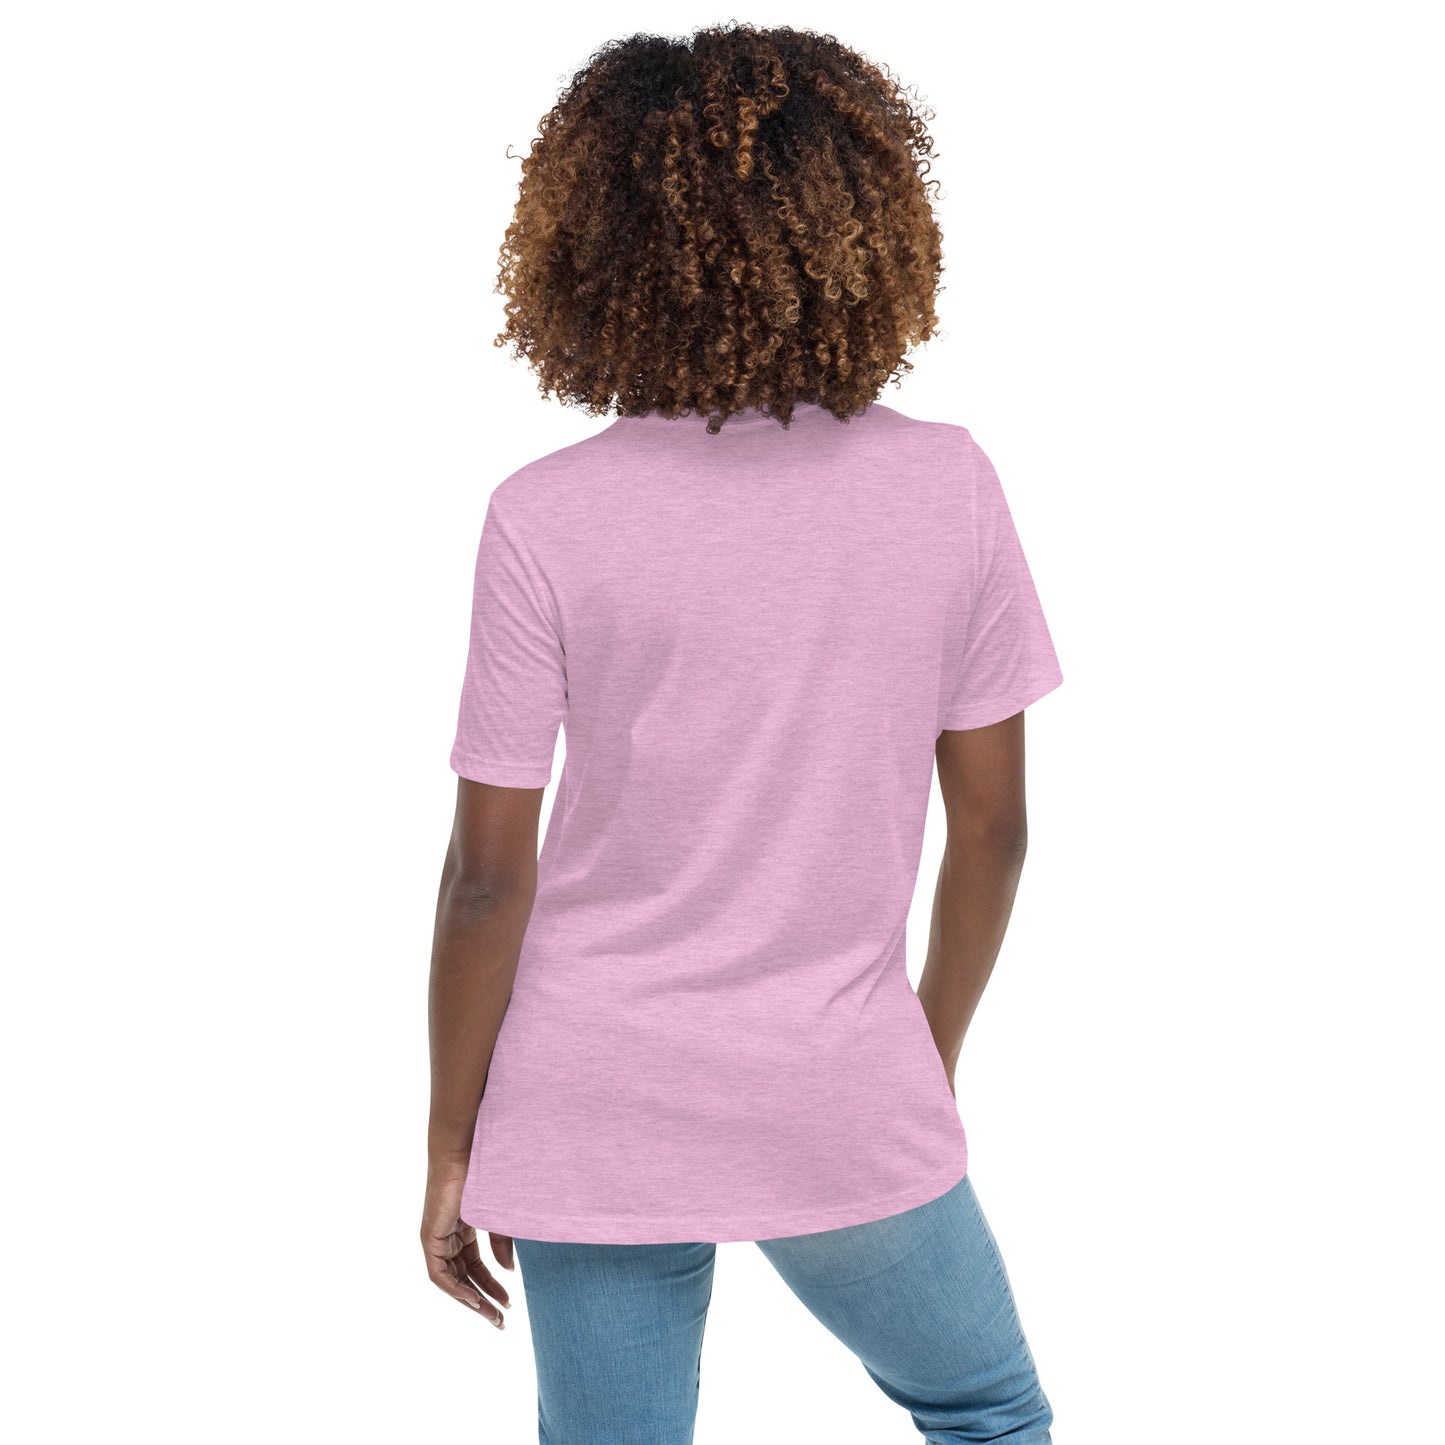 Te Amo Tee Women's Relaxed T-Shirt - Light Colors CedarHill Country Market